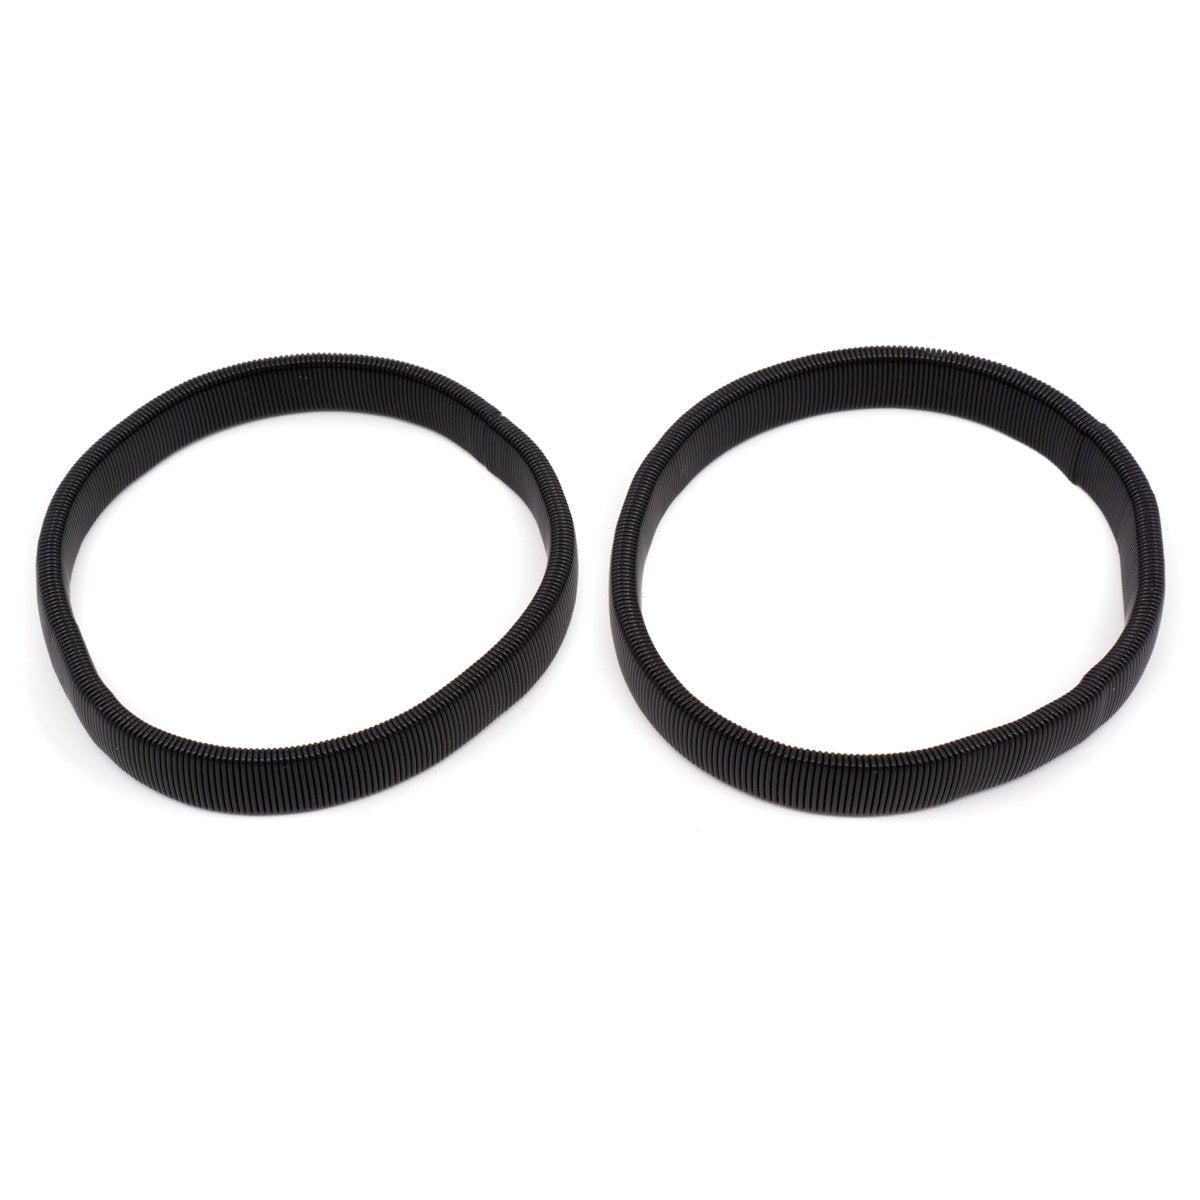 Mouwophouders zwart diameter 7cm per paar Mouwophouders MOP00001 8719874859851 - Fourniturenkraam.nl